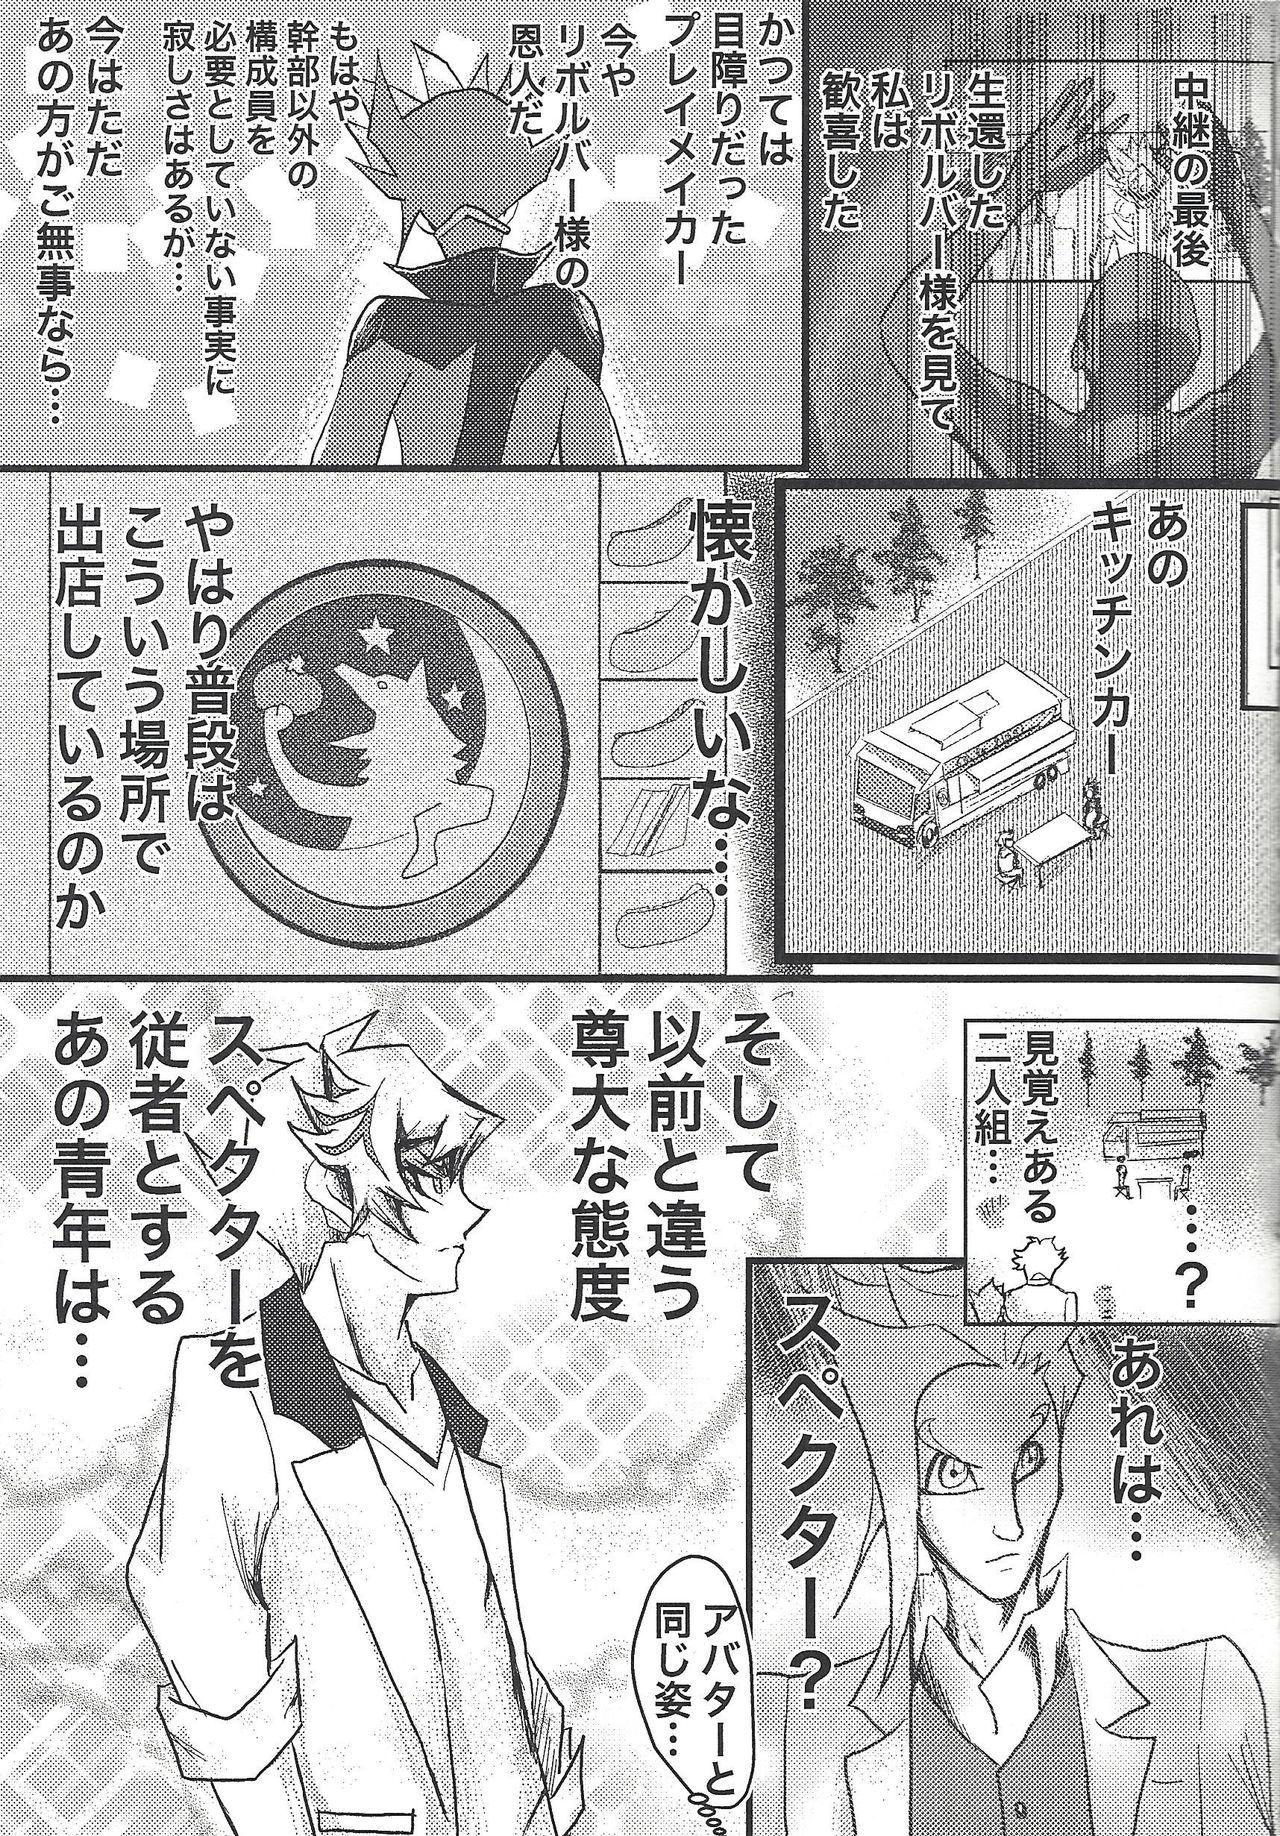 Animated Toaru Hanoi no Kishidanin no Kiroku - Yu gi oh vrains 18 Year Old Porn - Page 8